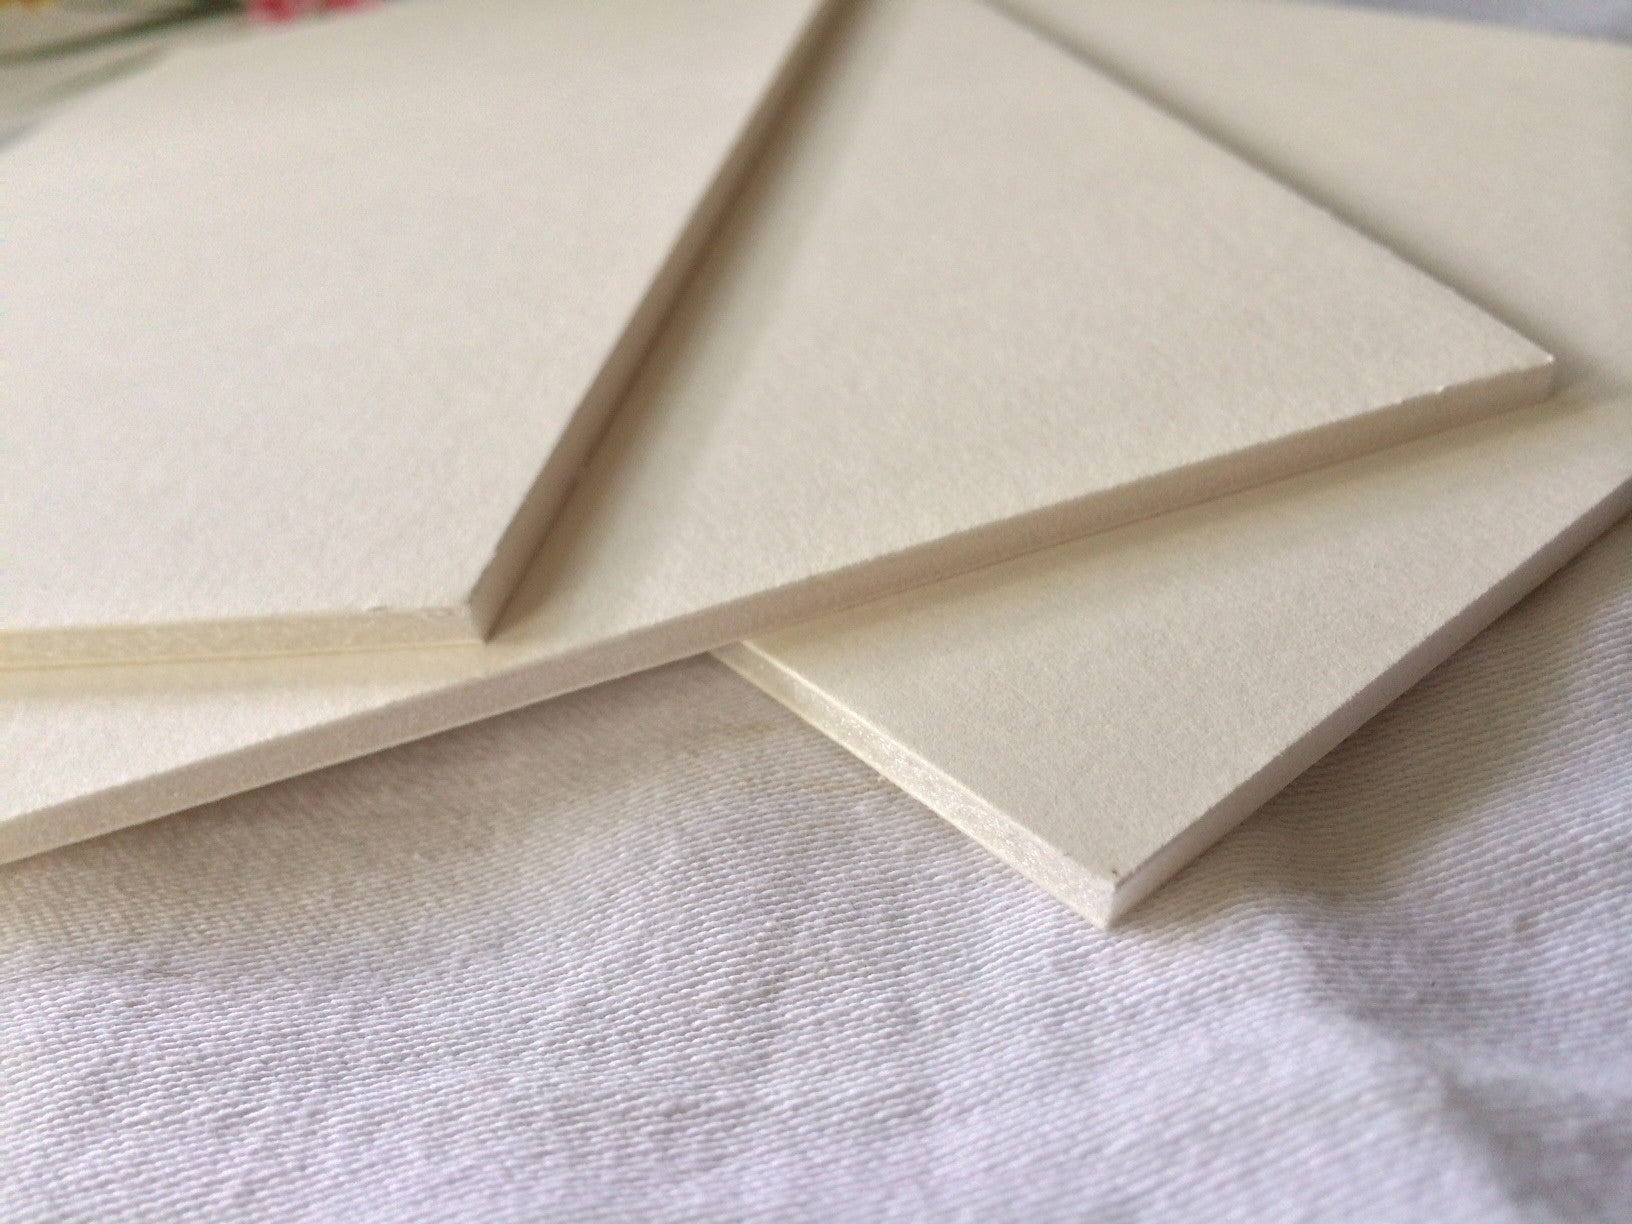 Three 5 x 7-inch foam core boards for mounting – Subversive Cross Stitch